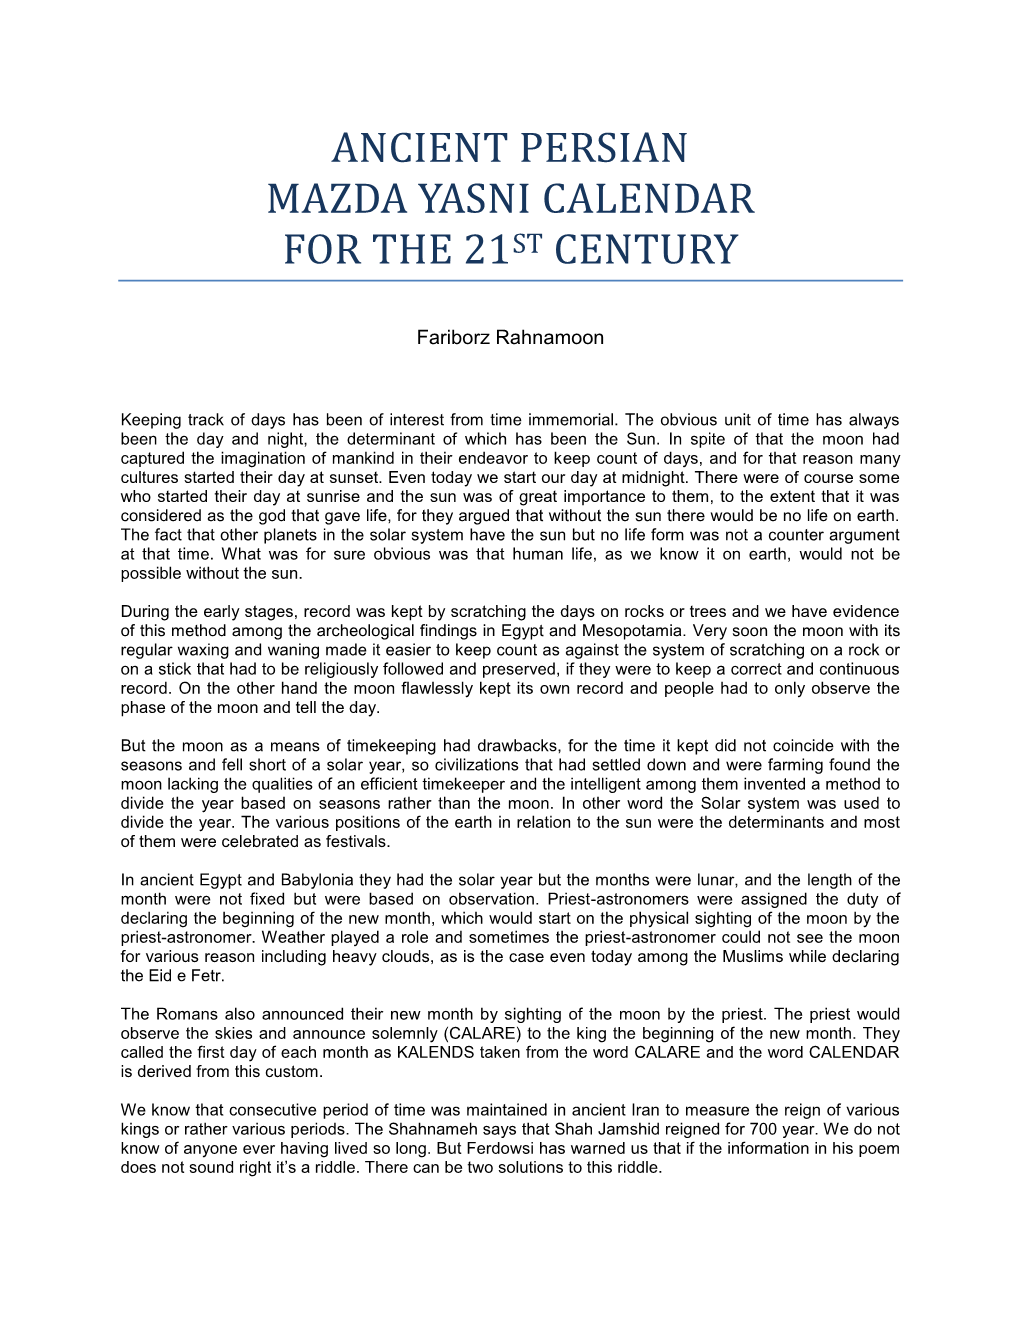 Ancient Persian Mazda Yasni Calendar for the 21St Century